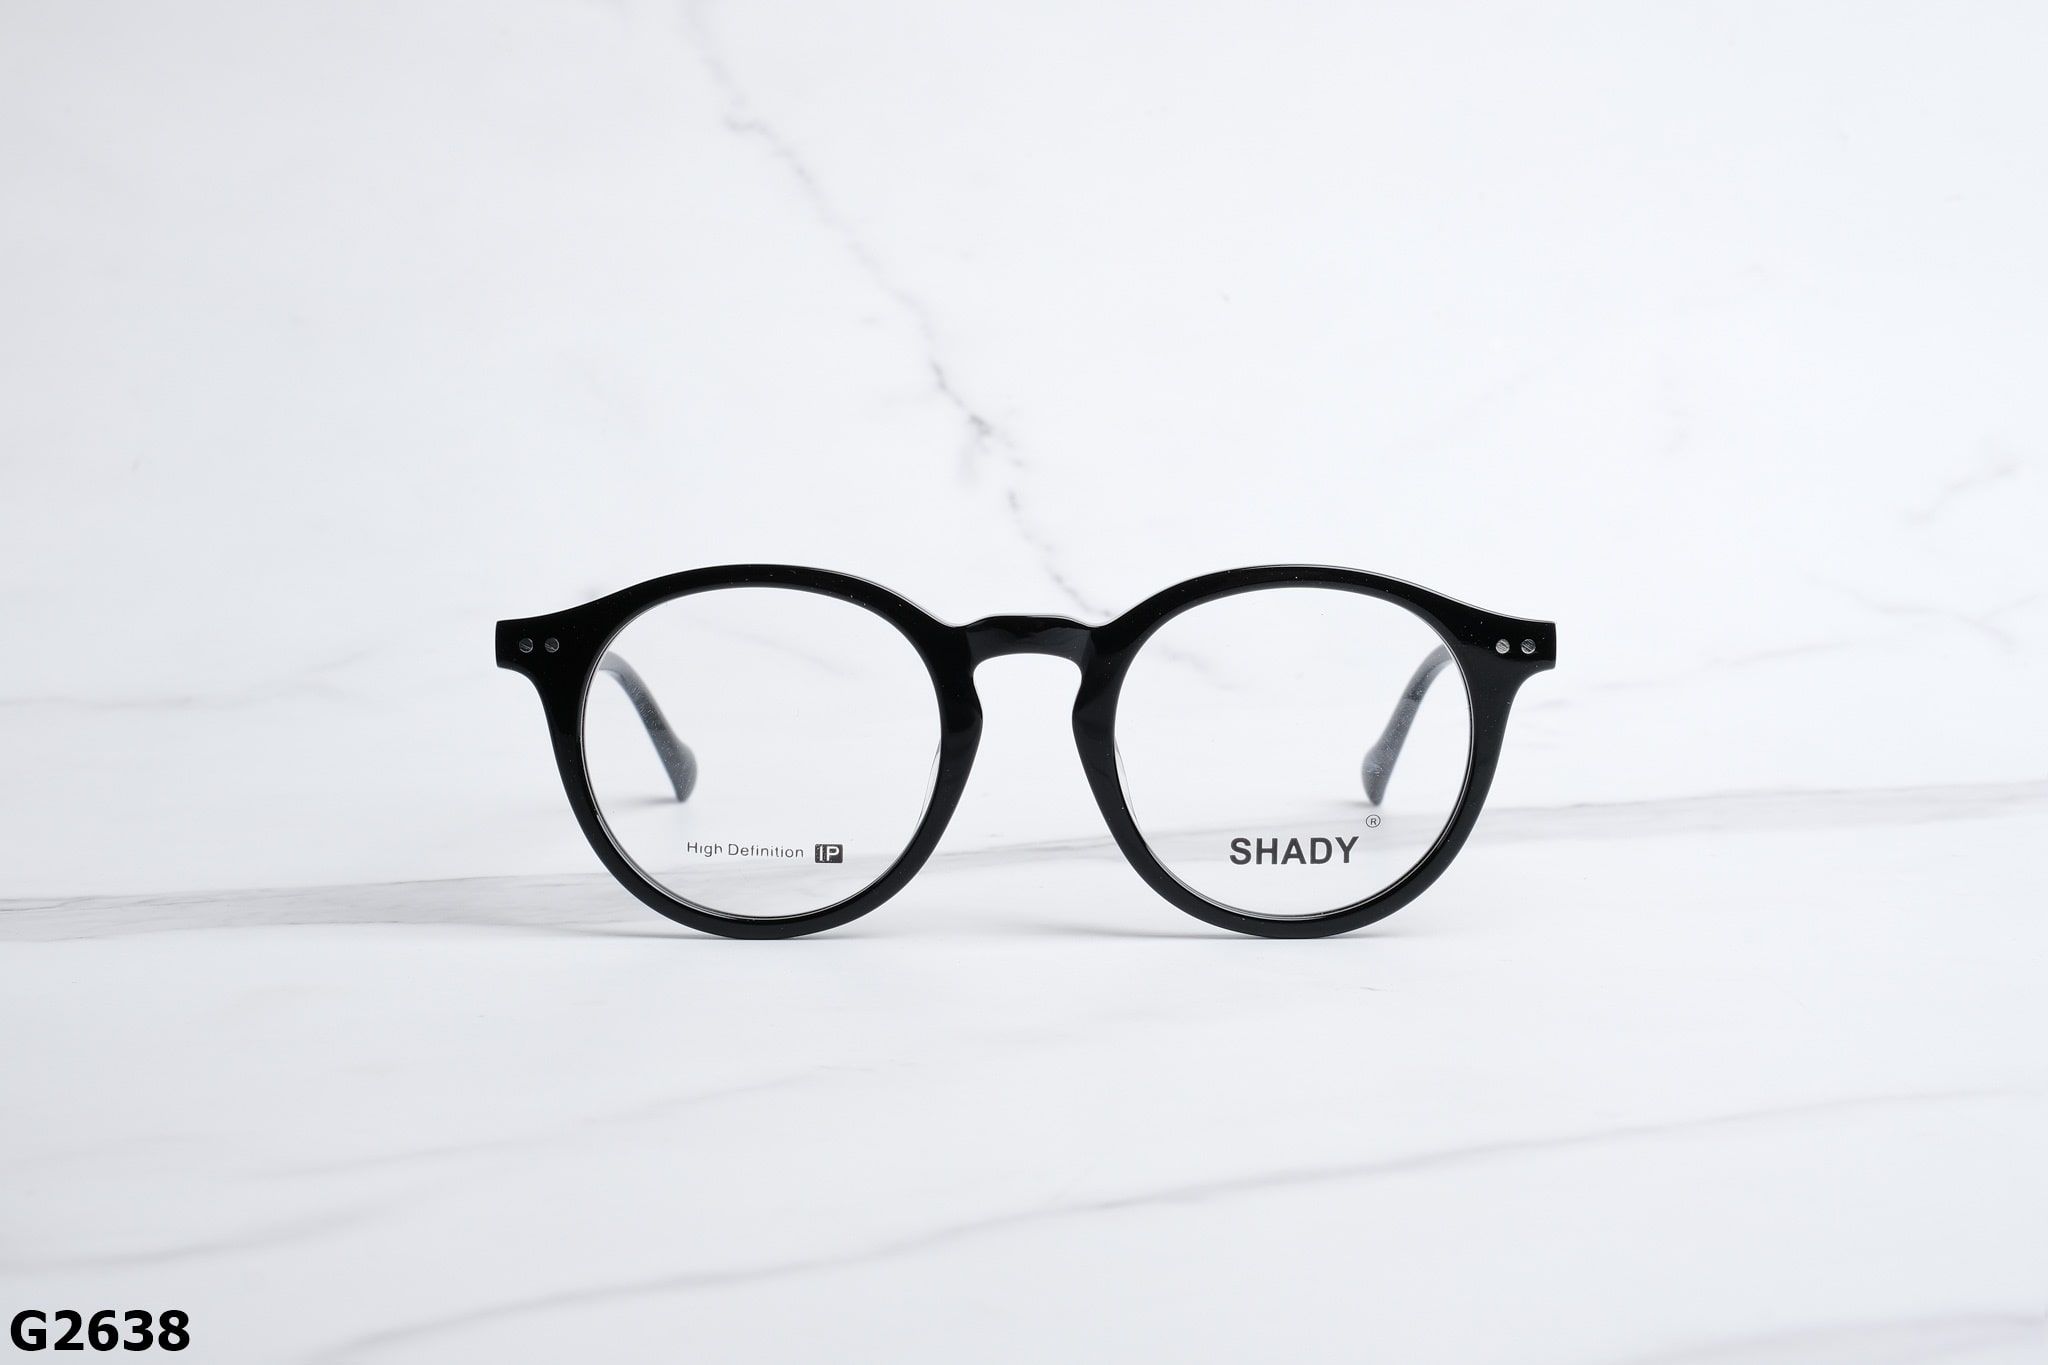  SHADY Eyewear - Glasses - G2638 